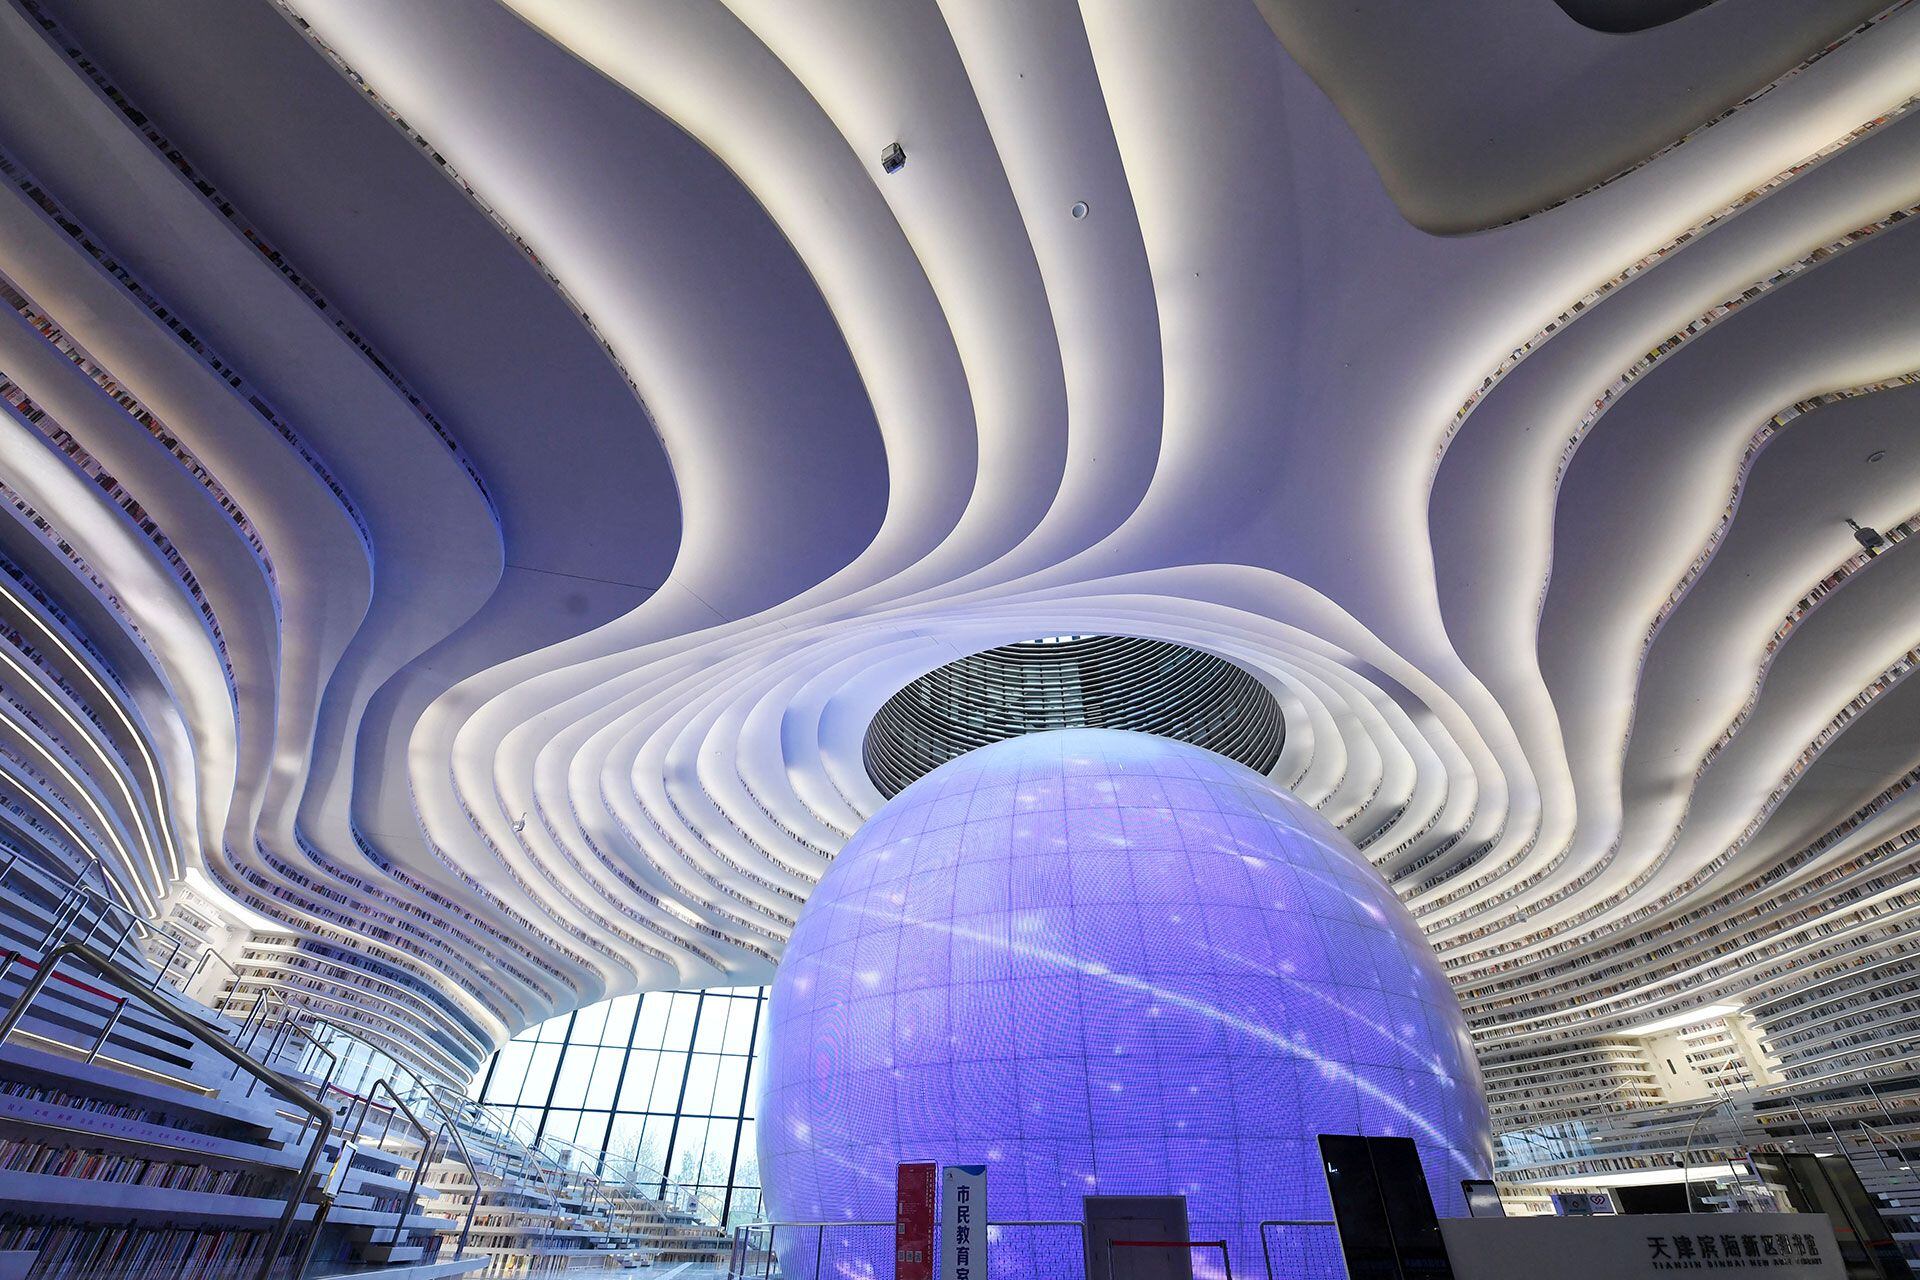 La Biblioteca Tianjin Binhai, en China, fue encargada al estudio de arquitectura holandés MVRDV (Foto: Grosbygroup)